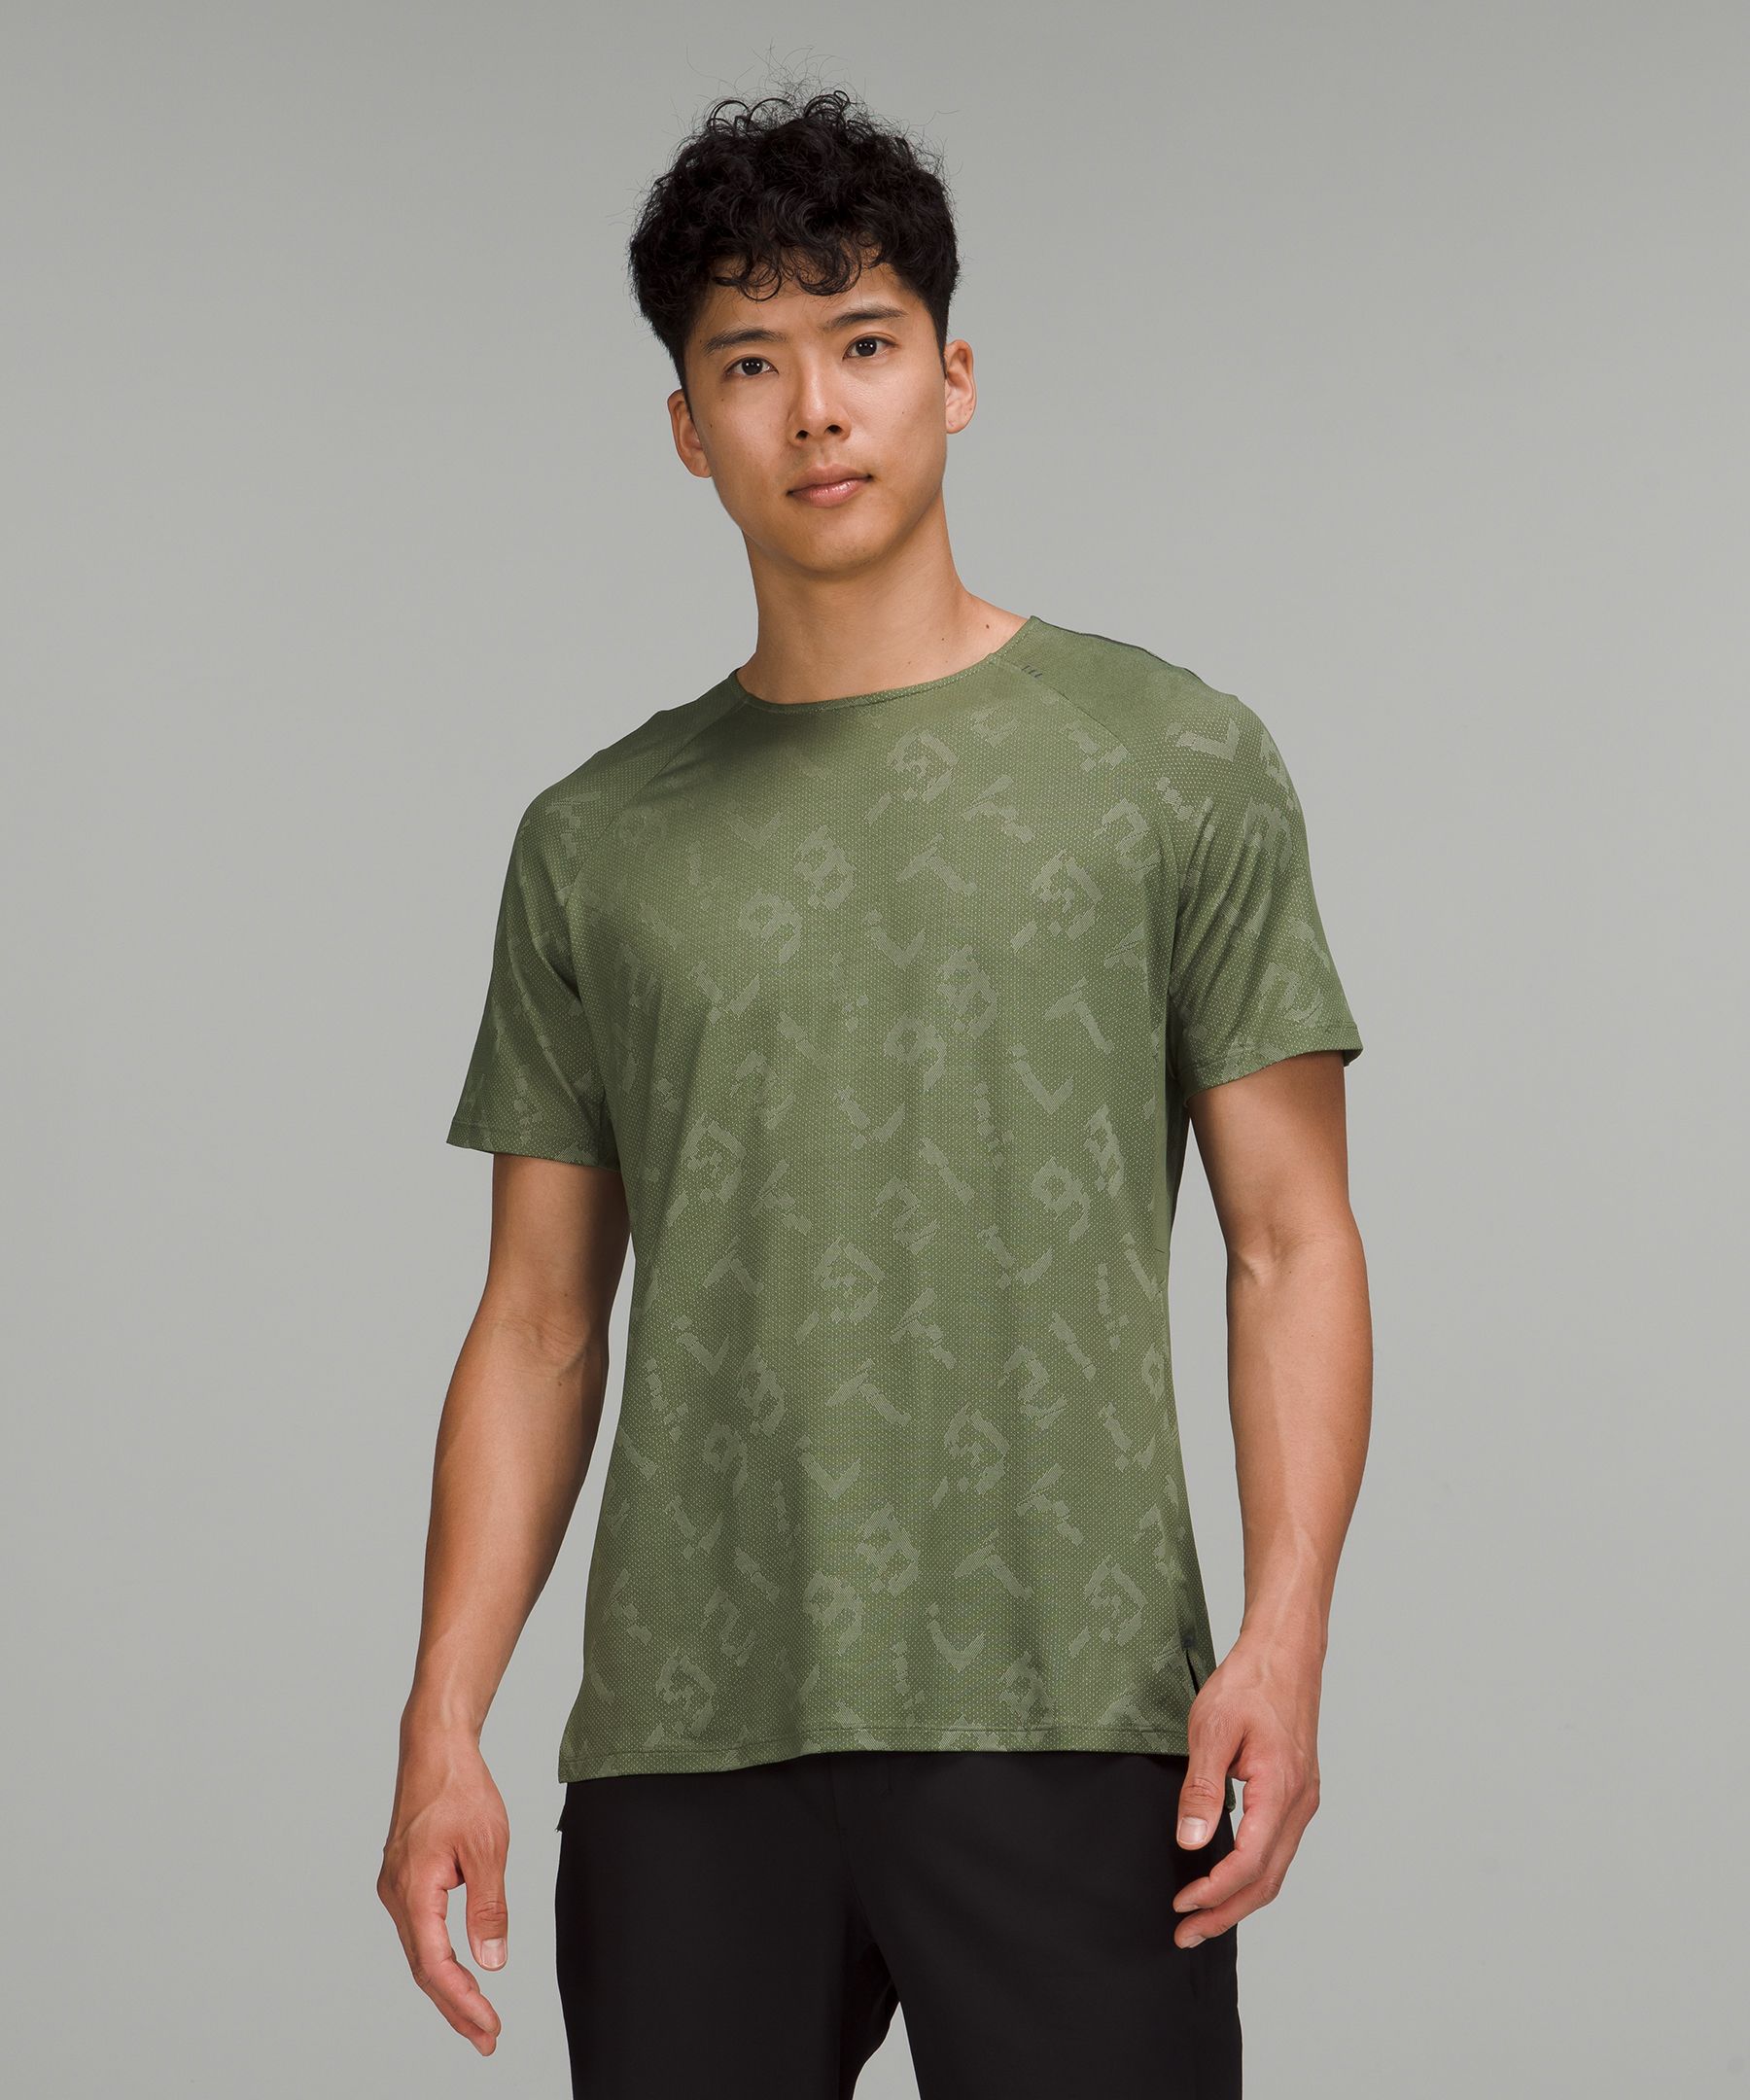 Lululemon Athletica Solid Green Short Sleeve T-Shirt Size 8 - 35% off